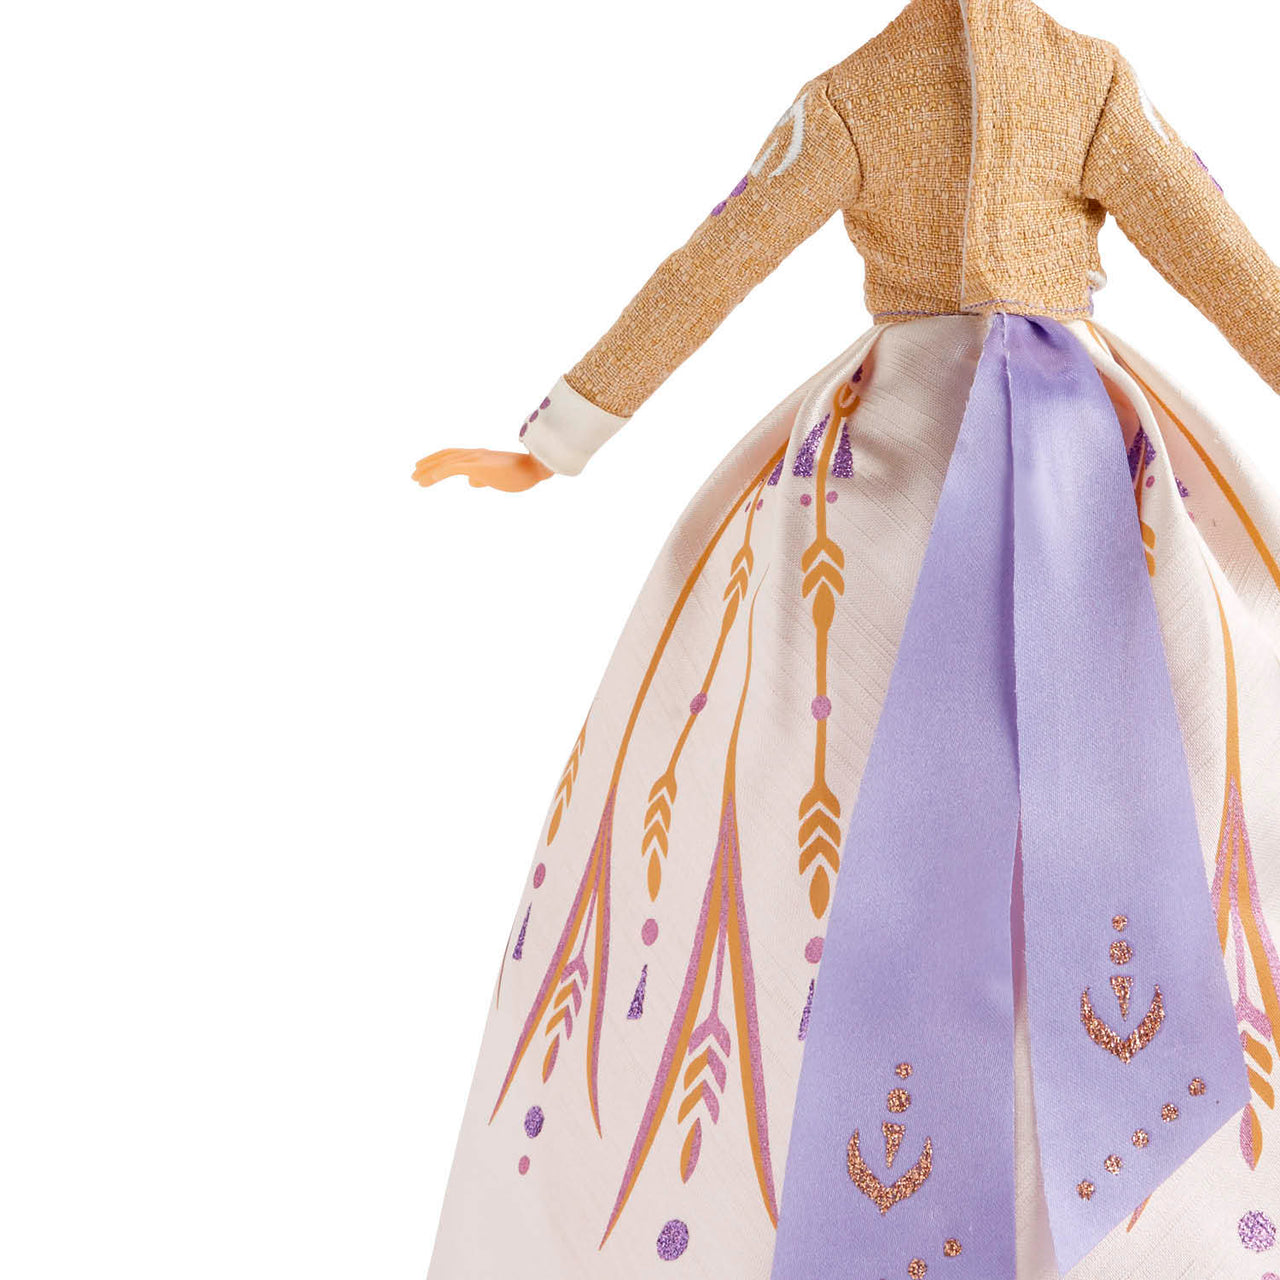 Disney Frozen 2 Arendelle Anna Fashion Doll With White Glitter Travel Dress